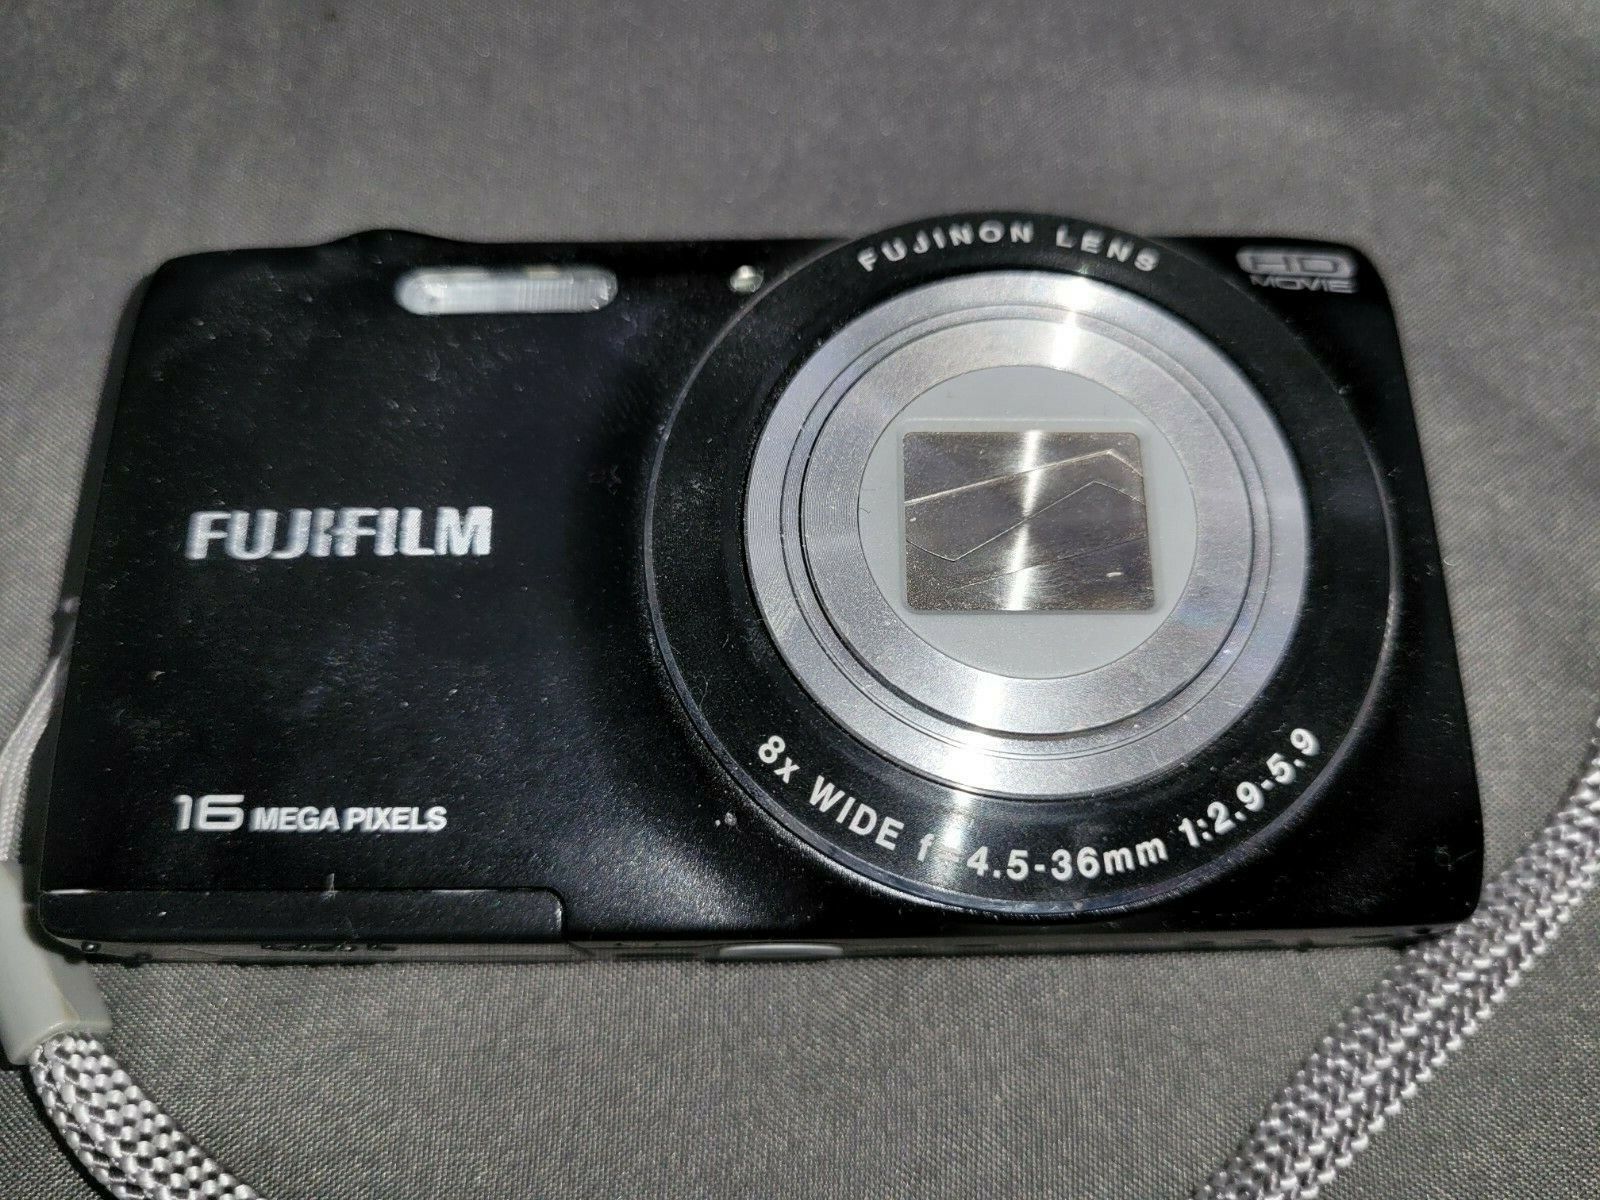 nikkel Ontleden uitstulping Fujifilm FinePix JZ Series JZ250 16.0MP Digital Camera - Black 8x Zoom  74101012545 | eBay